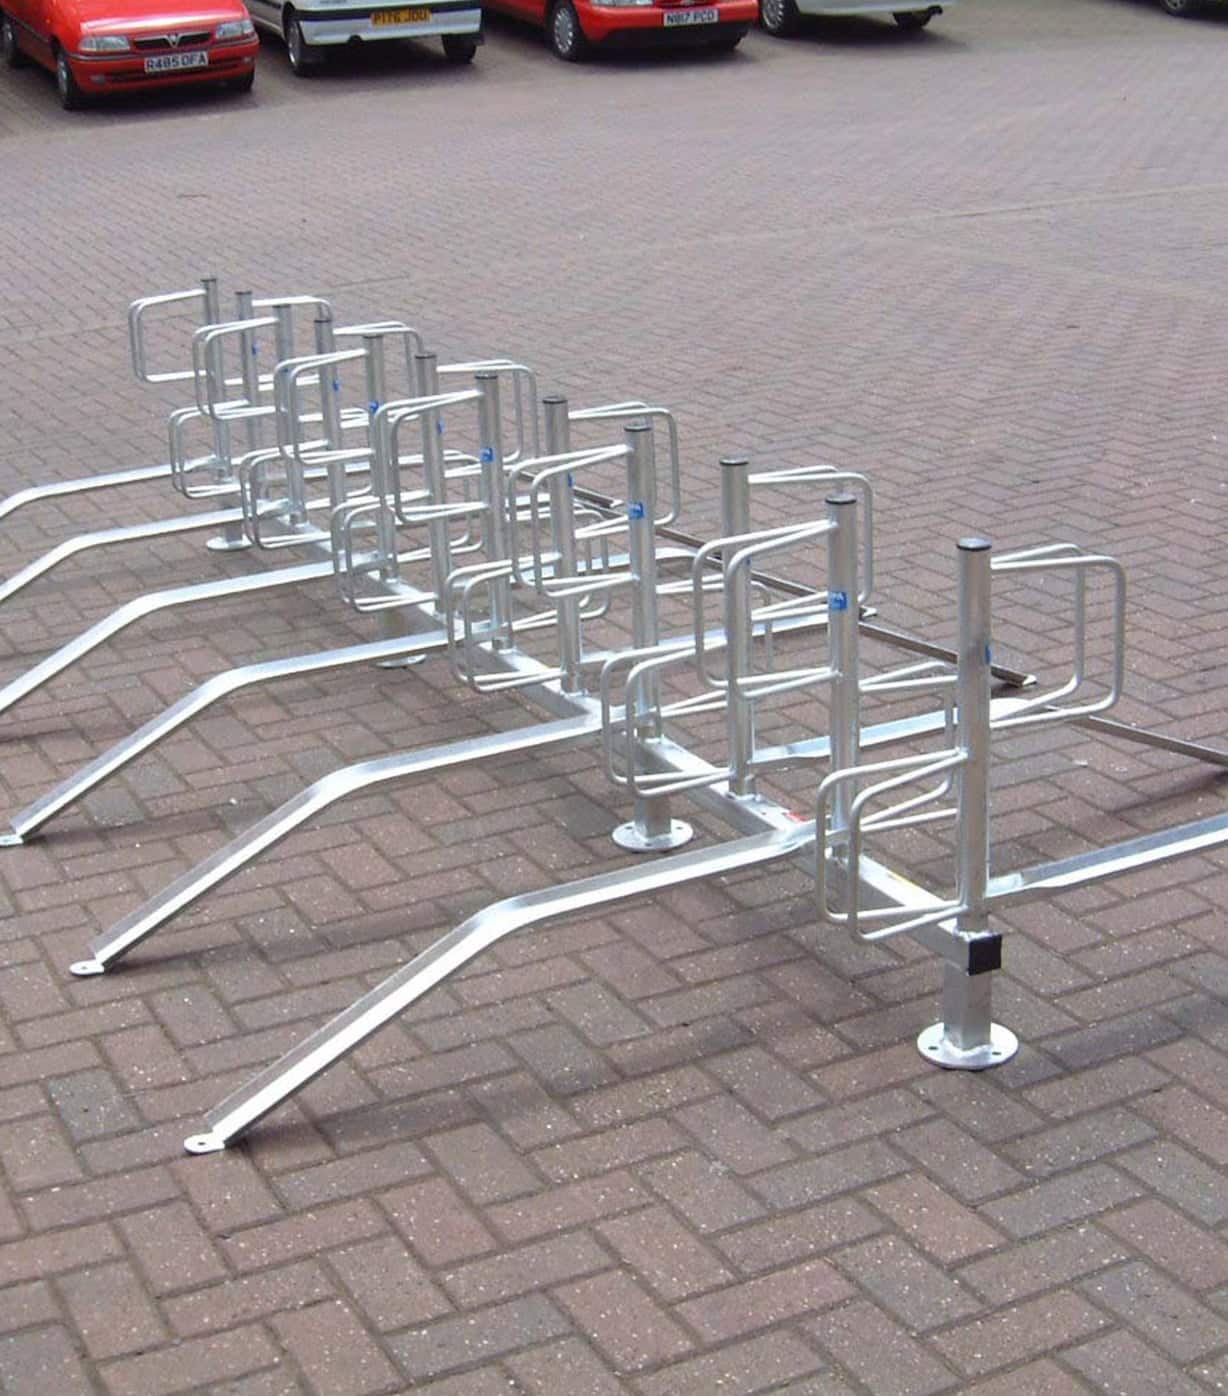 toast rack bike stand